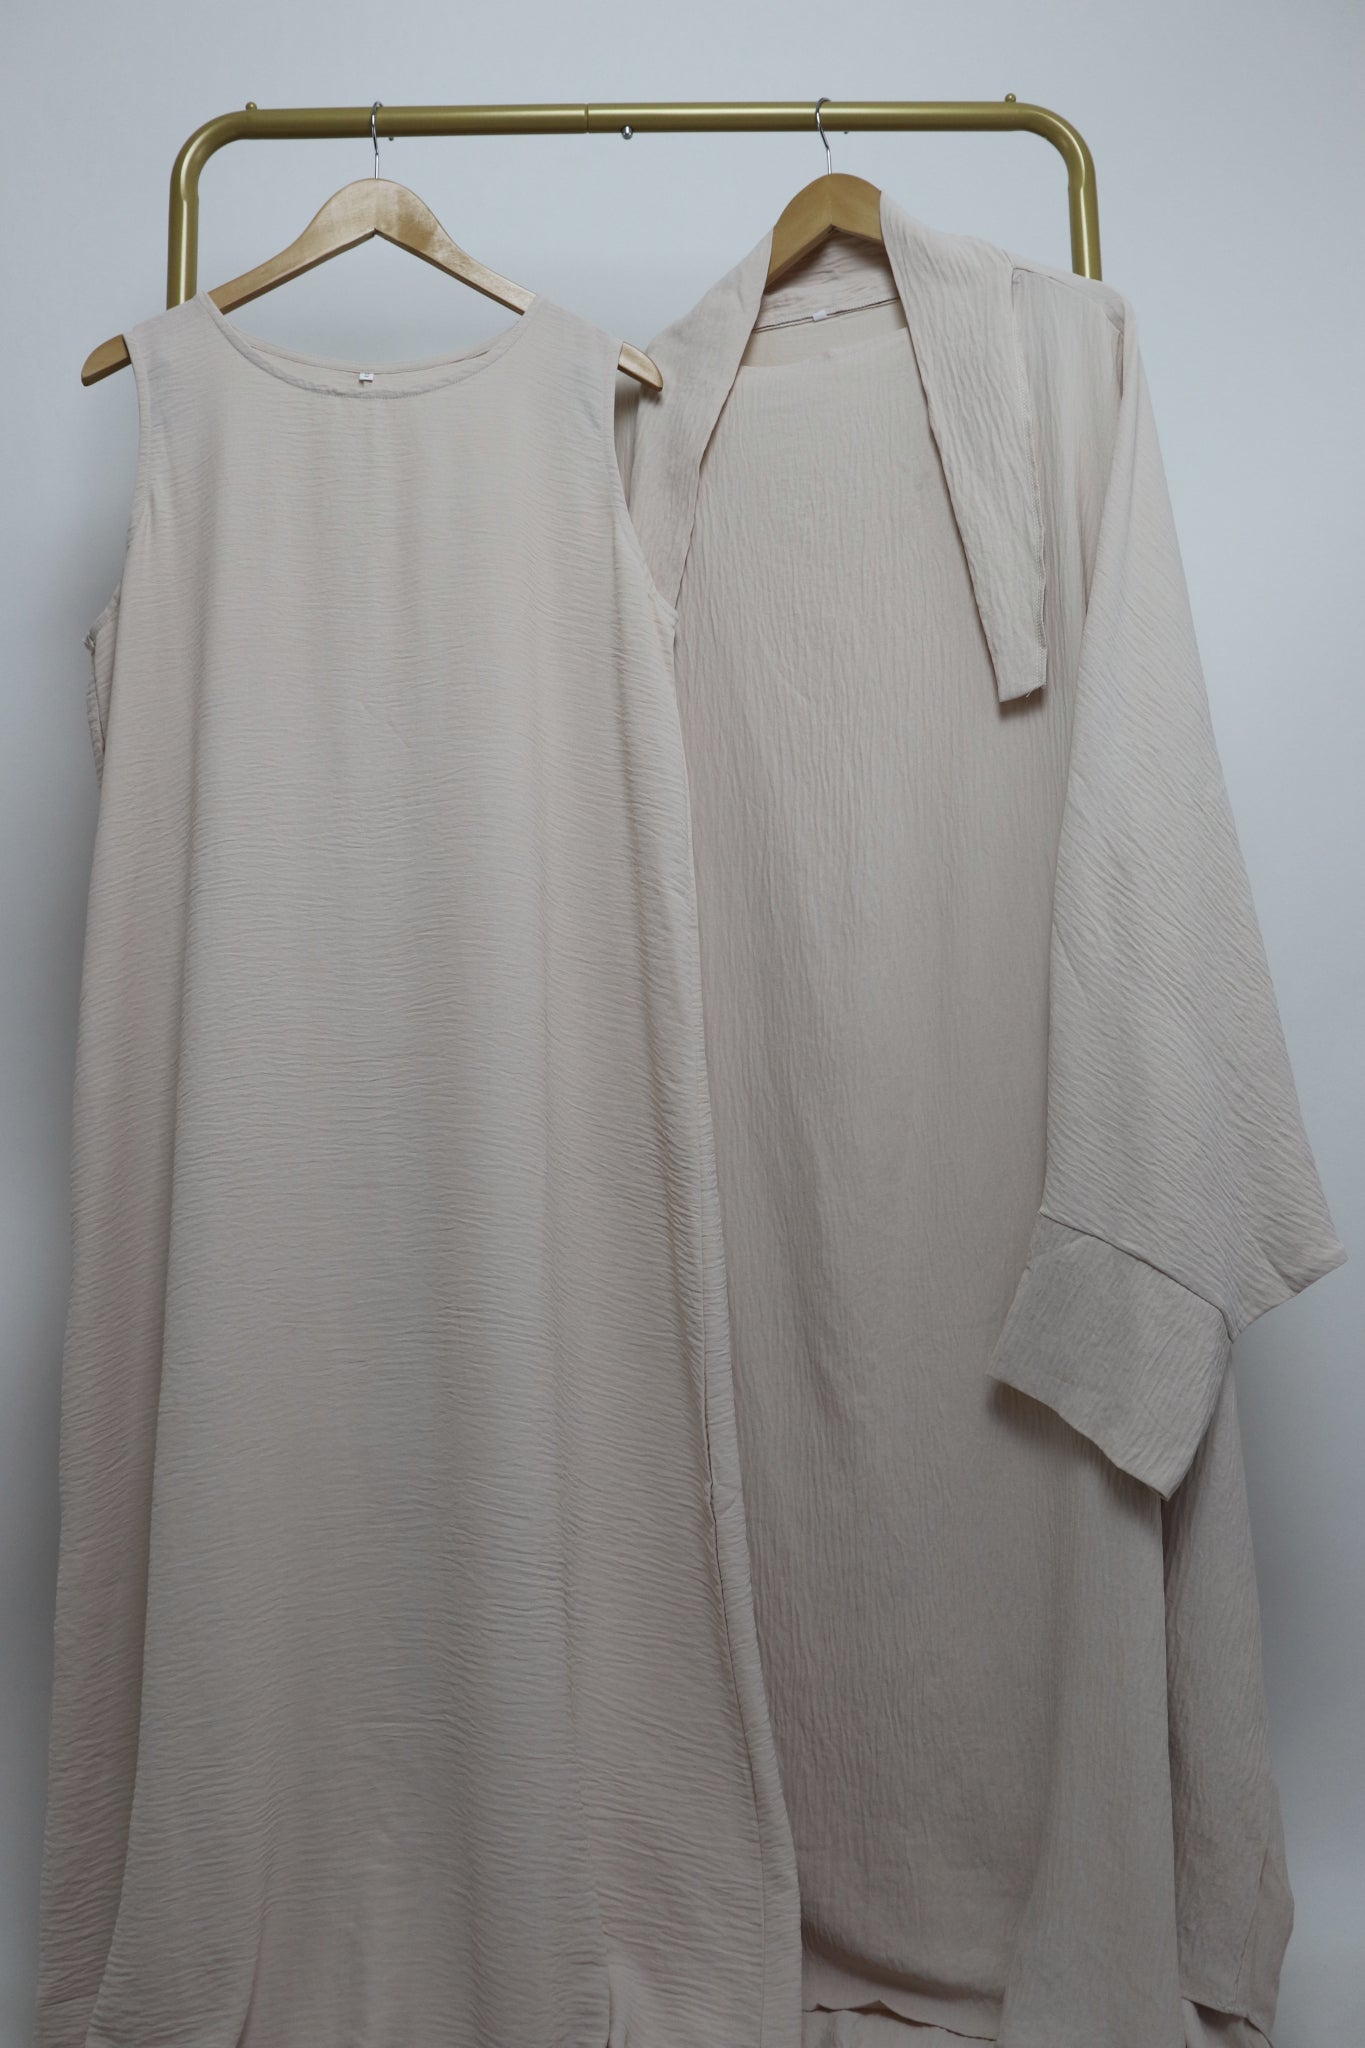 2 Piece Jilbab Dress Set - Dove